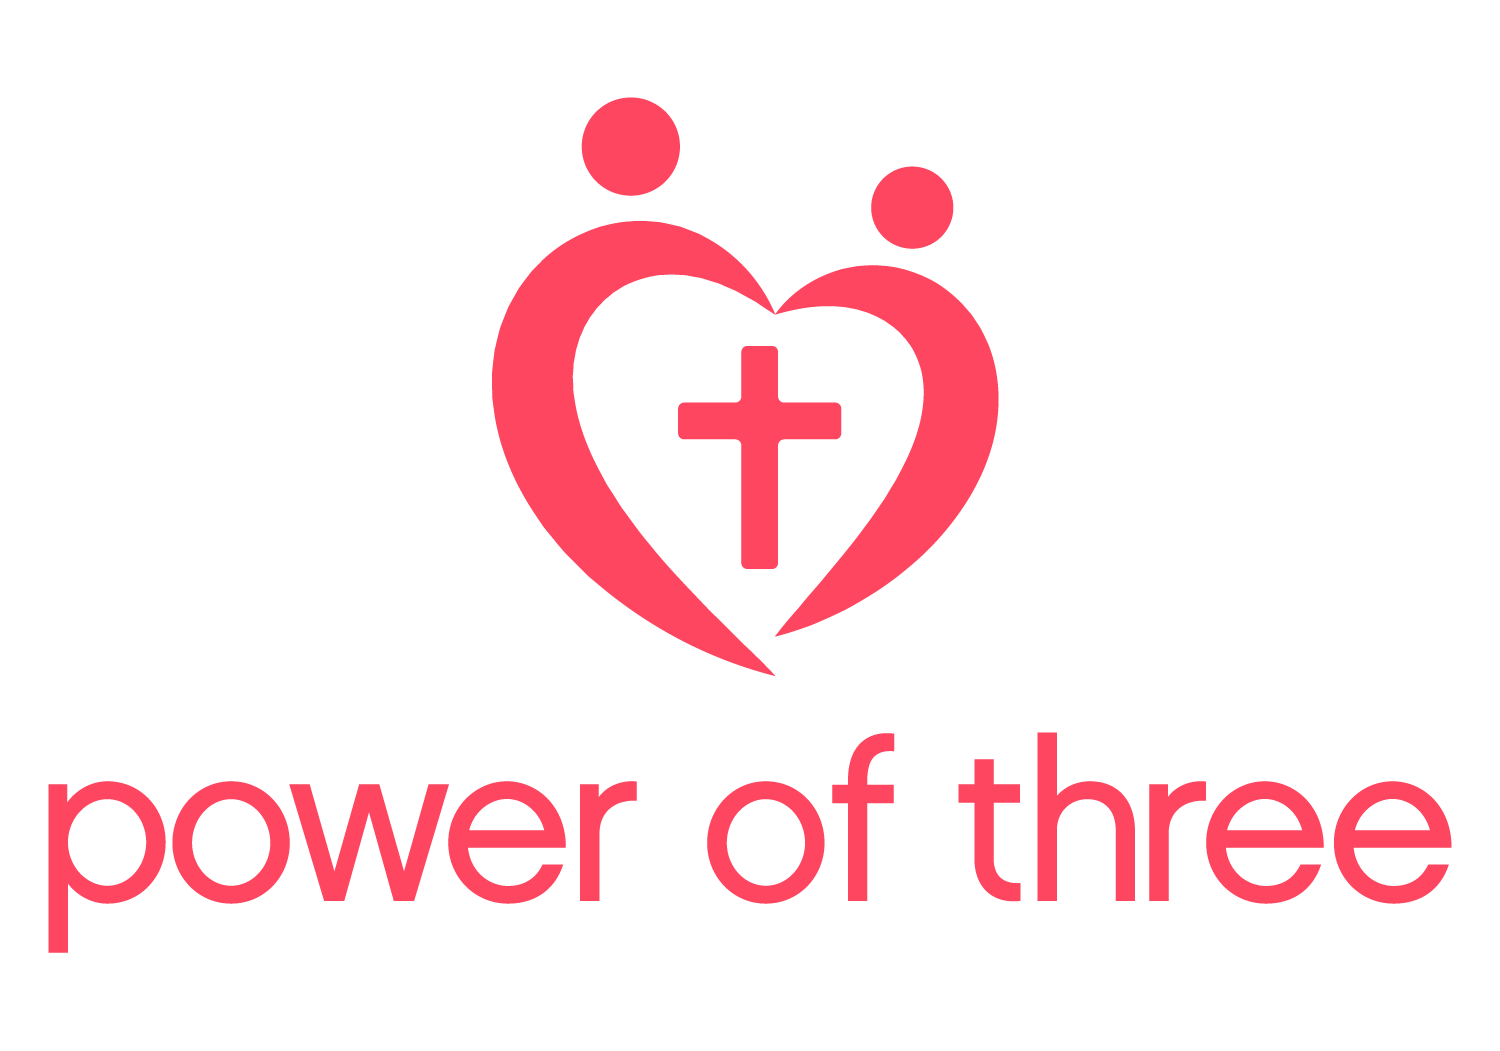 Power Ministry Logo - Cloverdale Baptist Church of Three Mentoring Ministry